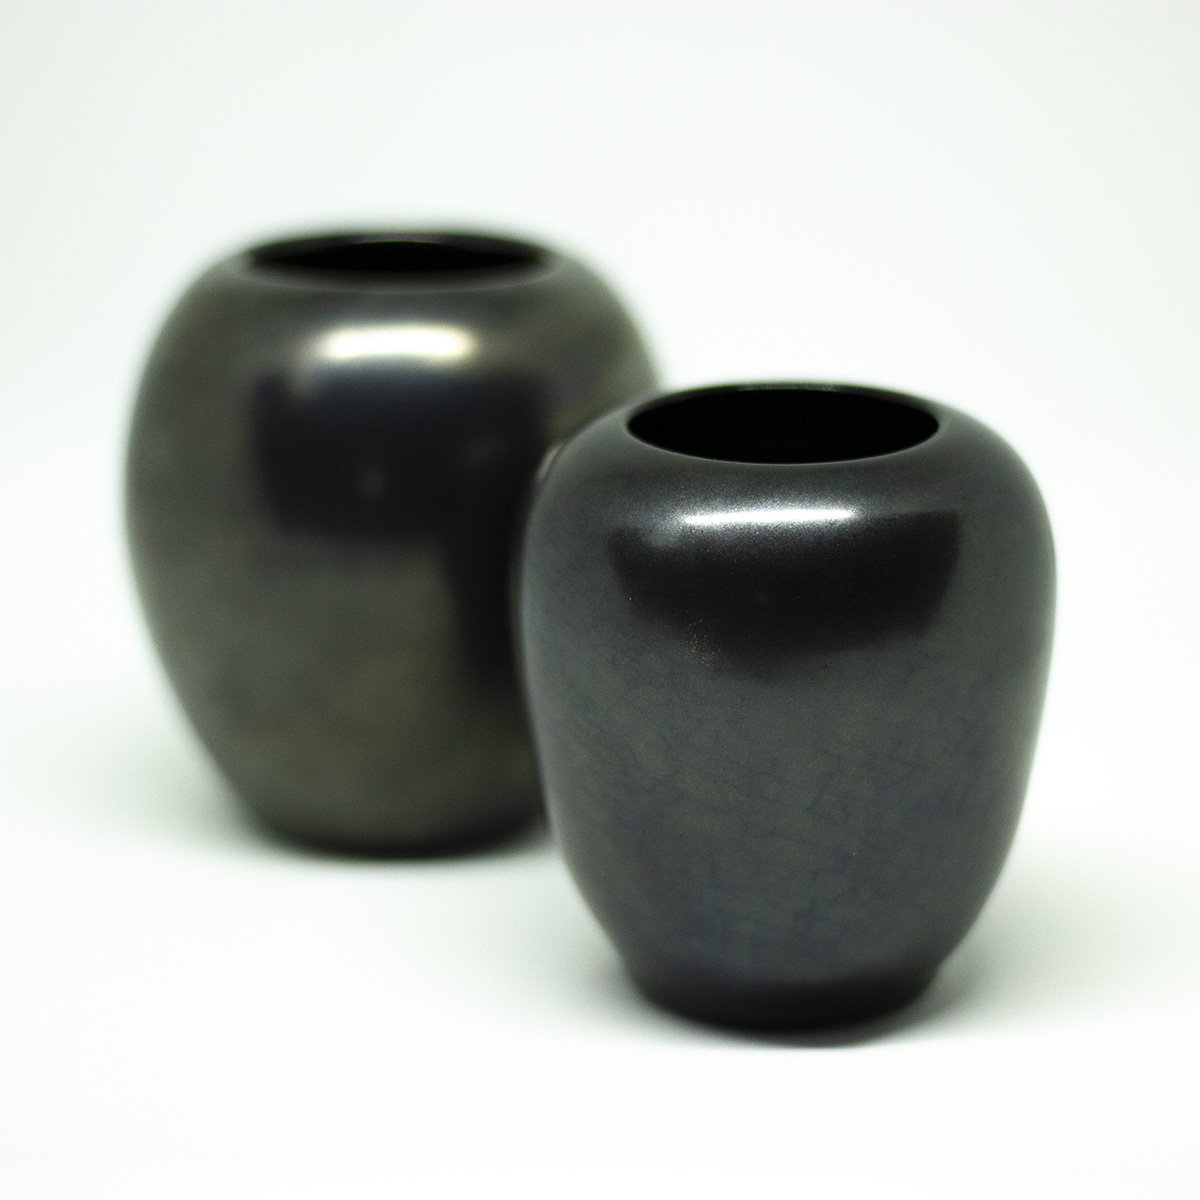 yesterday small set of black vases - een stip